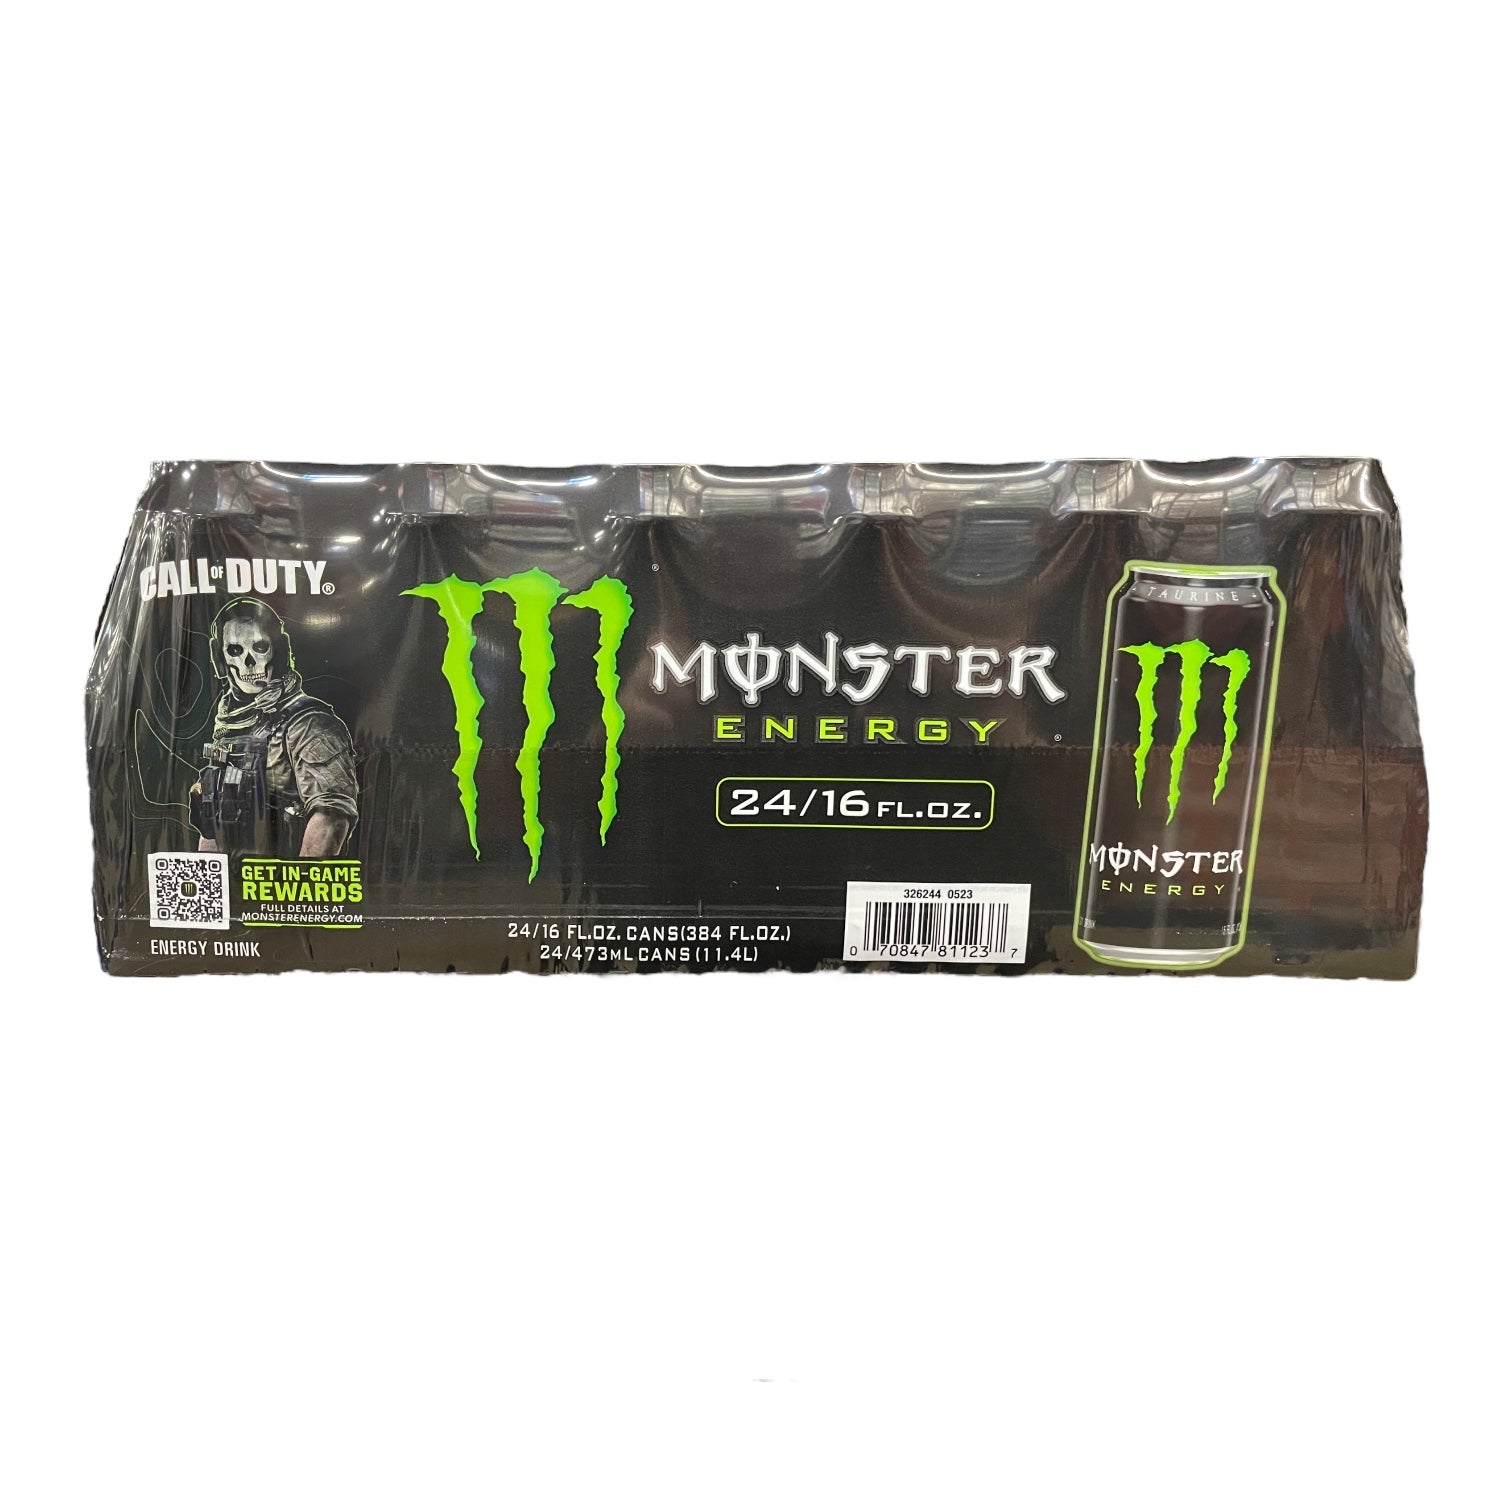 Monster Energy Drink Original, Green, 16 oz (24 Pack)